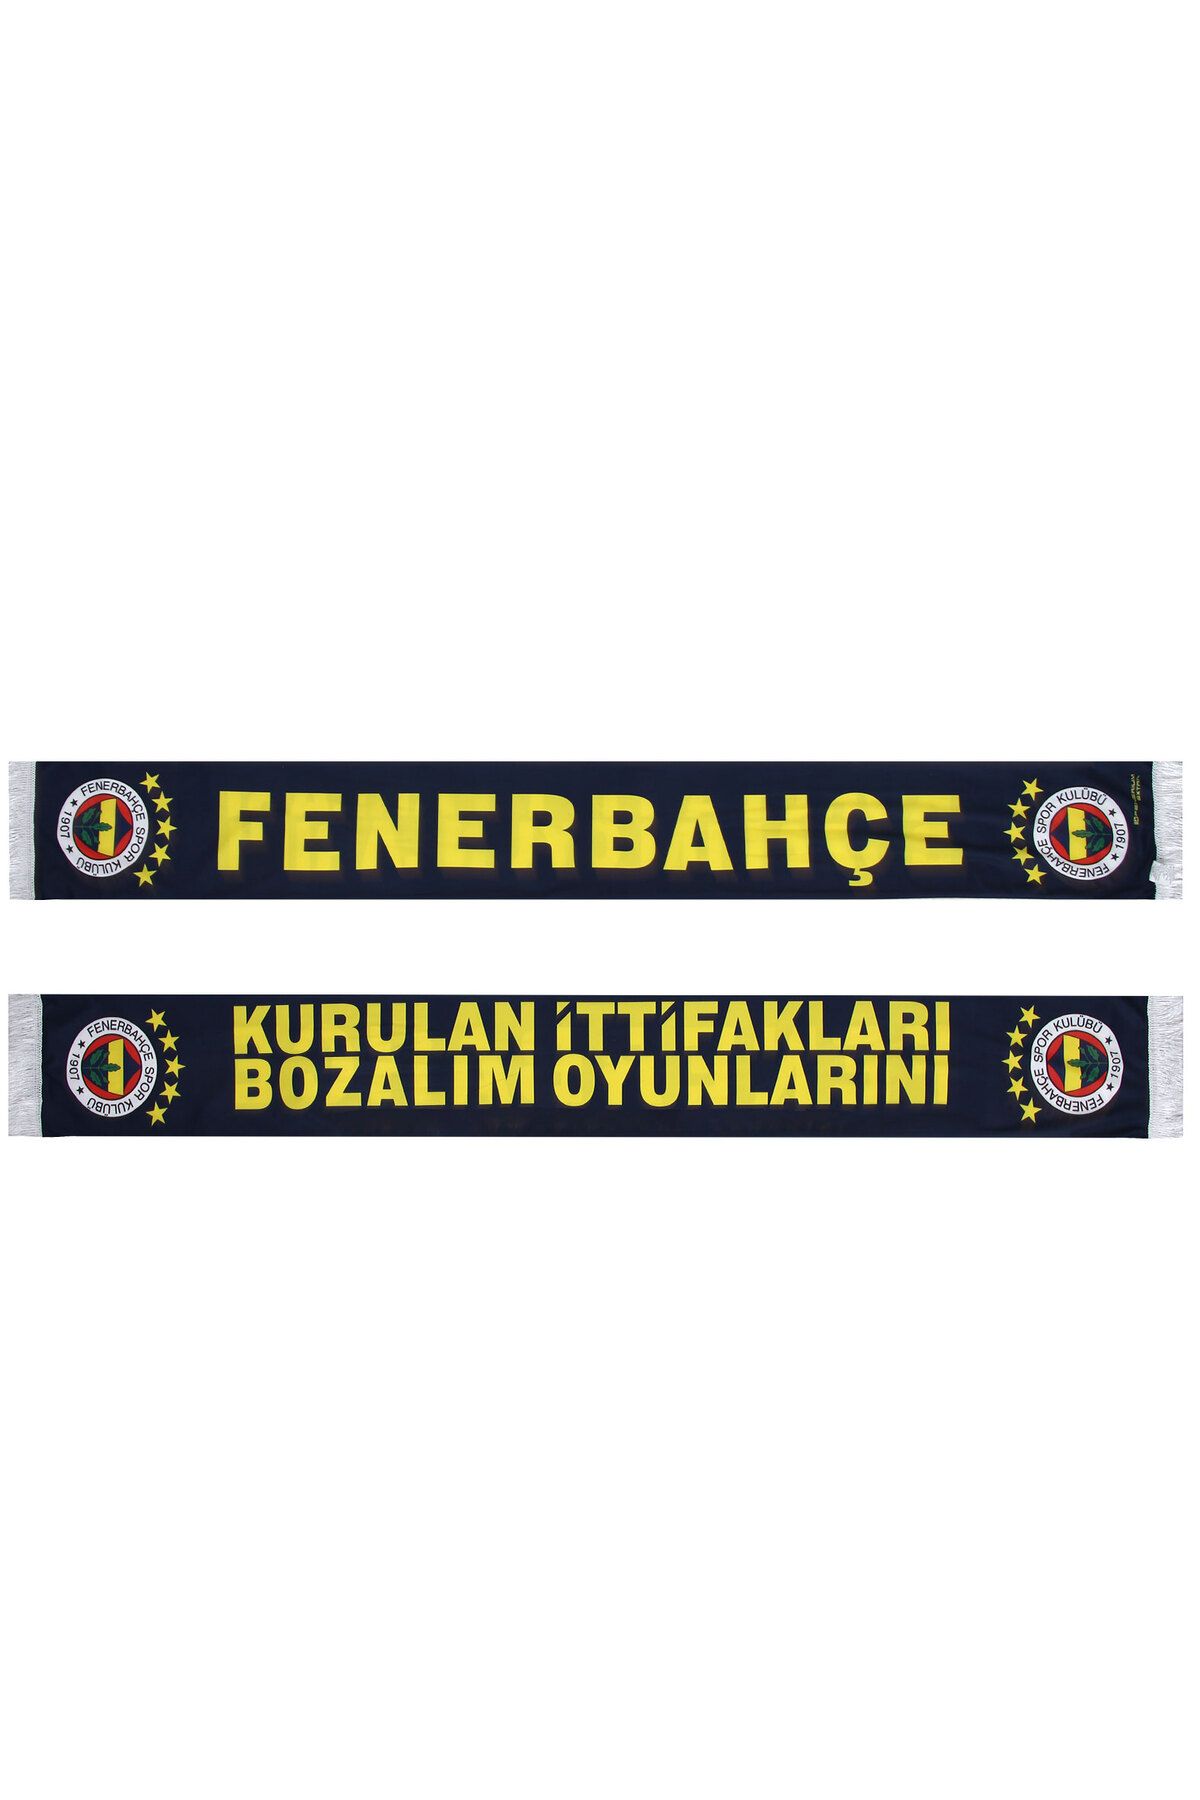 Fenerbahçe UNISEX KURULAN İTTİFAKLARI BOZALIM OY